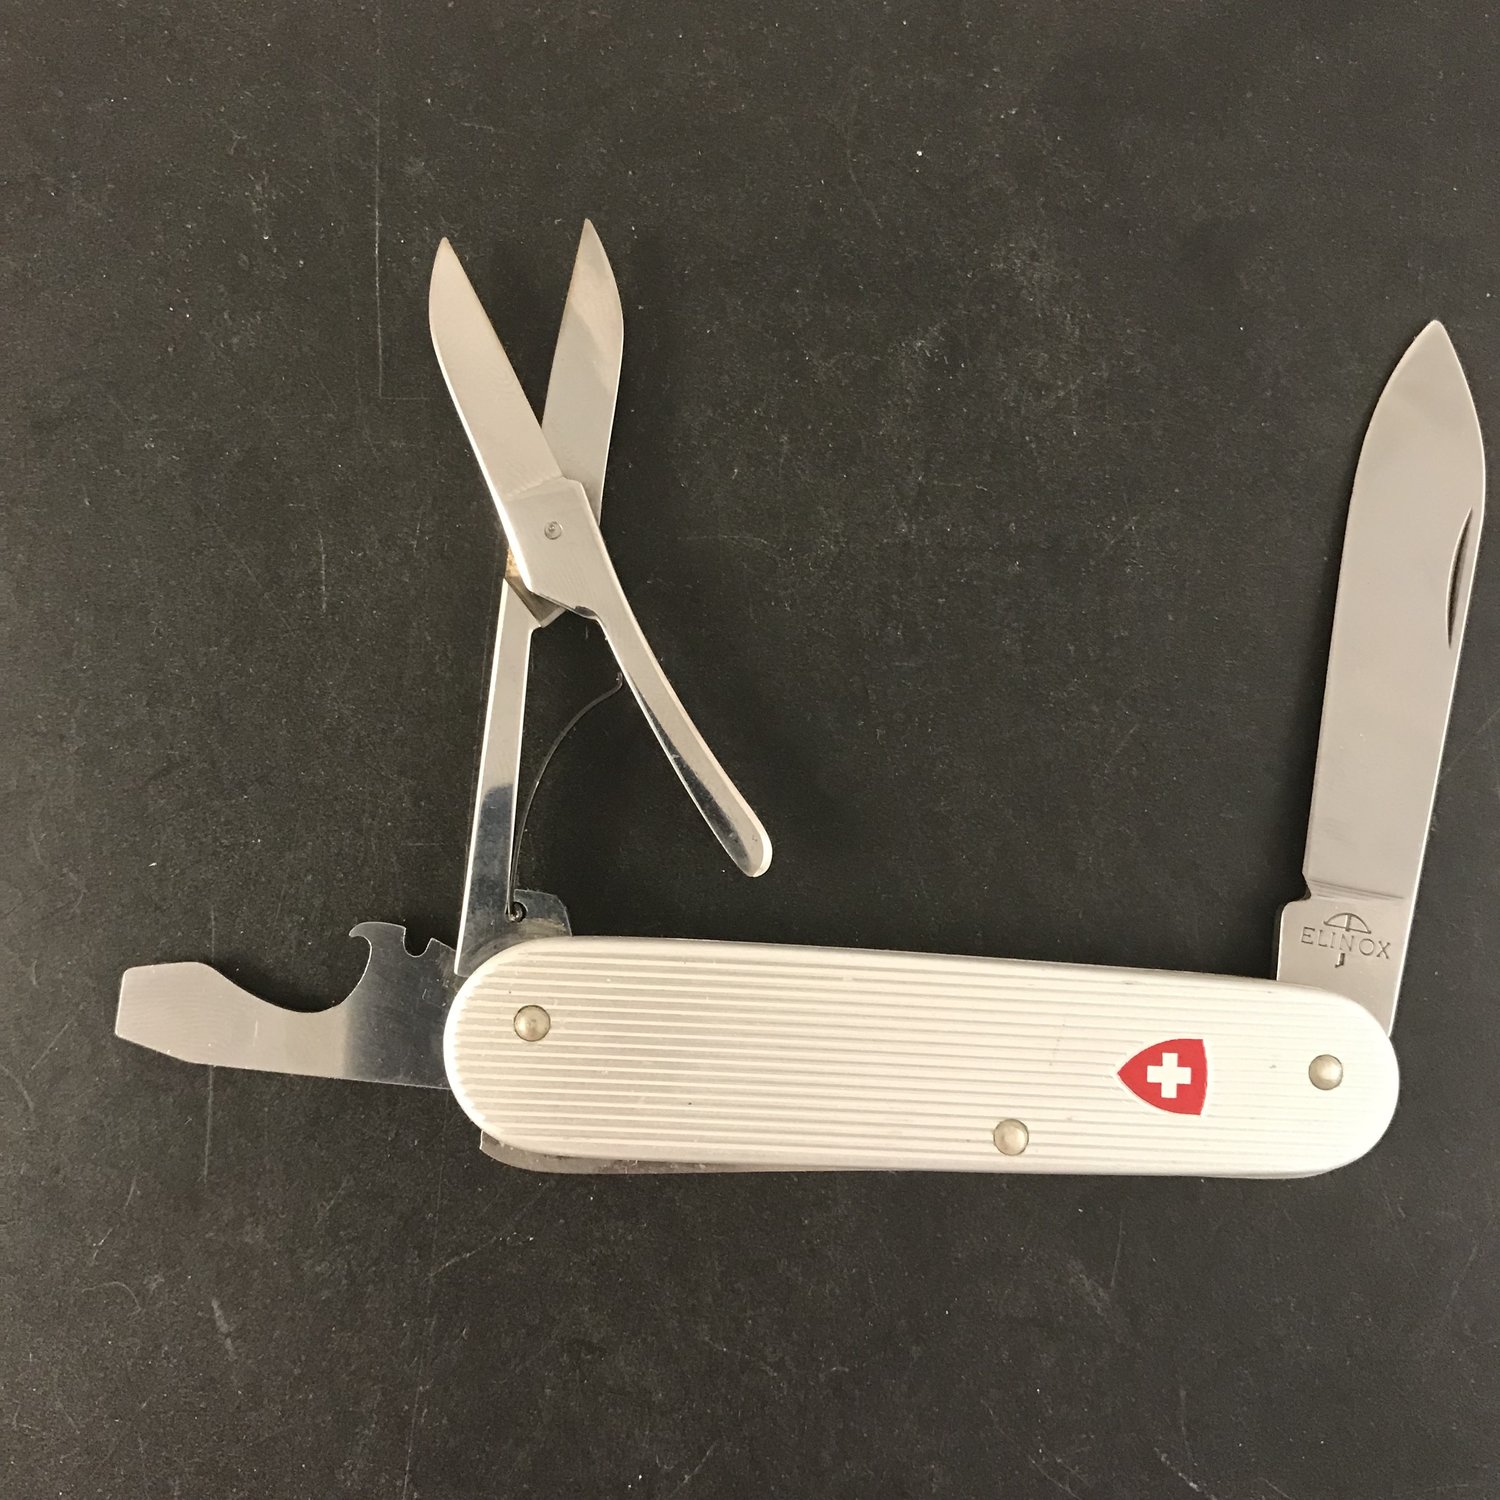 Victorinox folding scissors